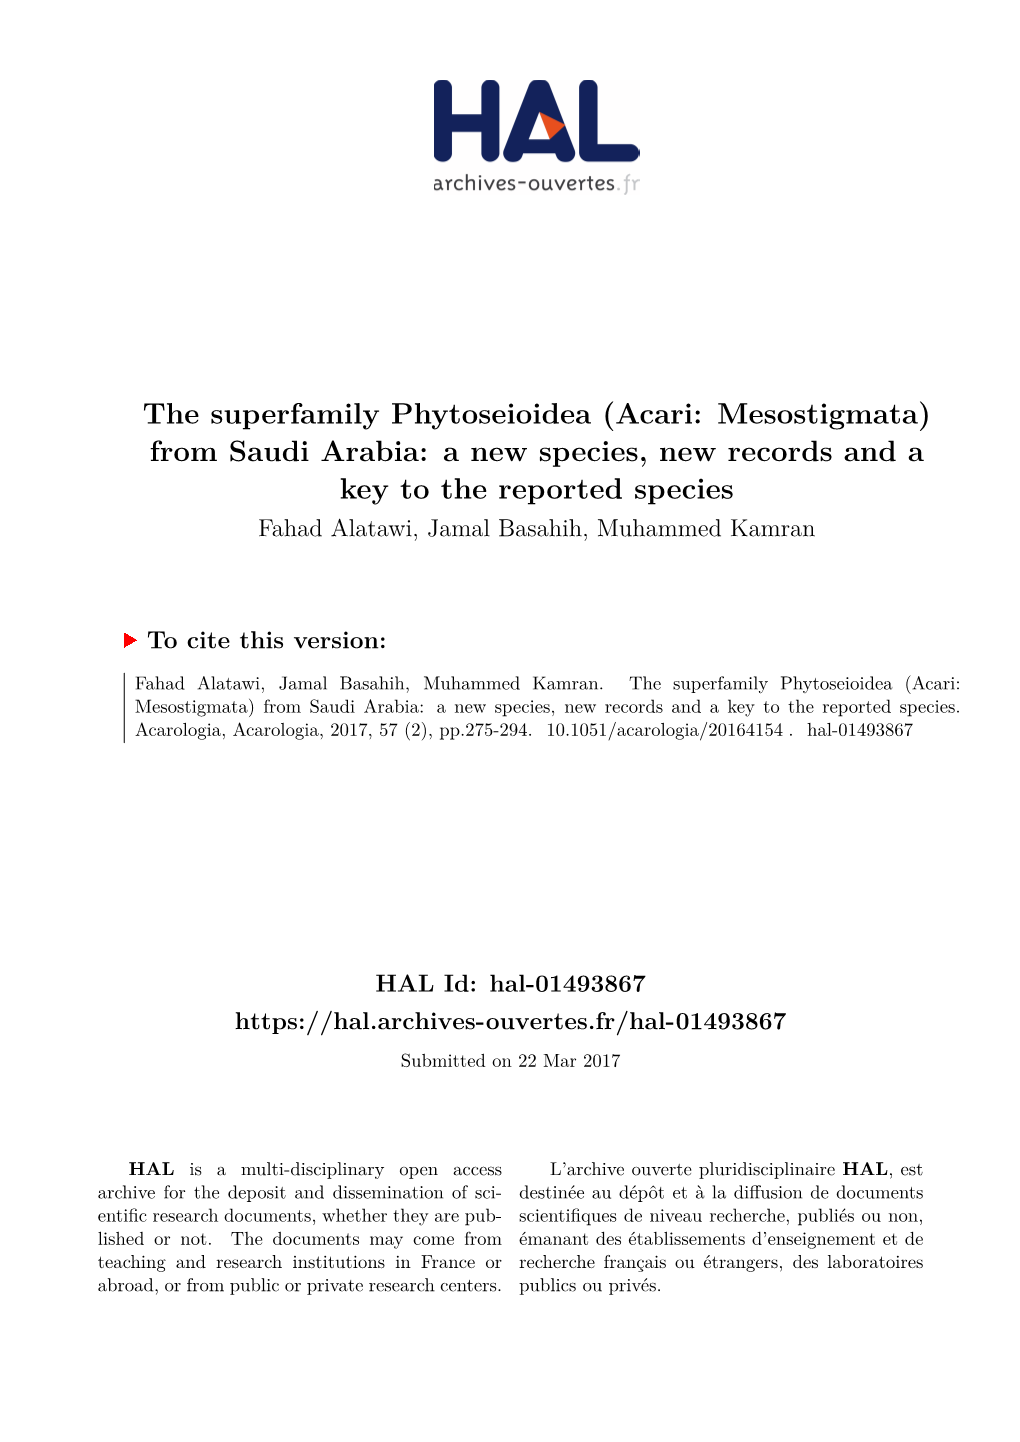 The Superfamily Phytoseioidea (Acari: Mesostigmata) from Saudi Arabia